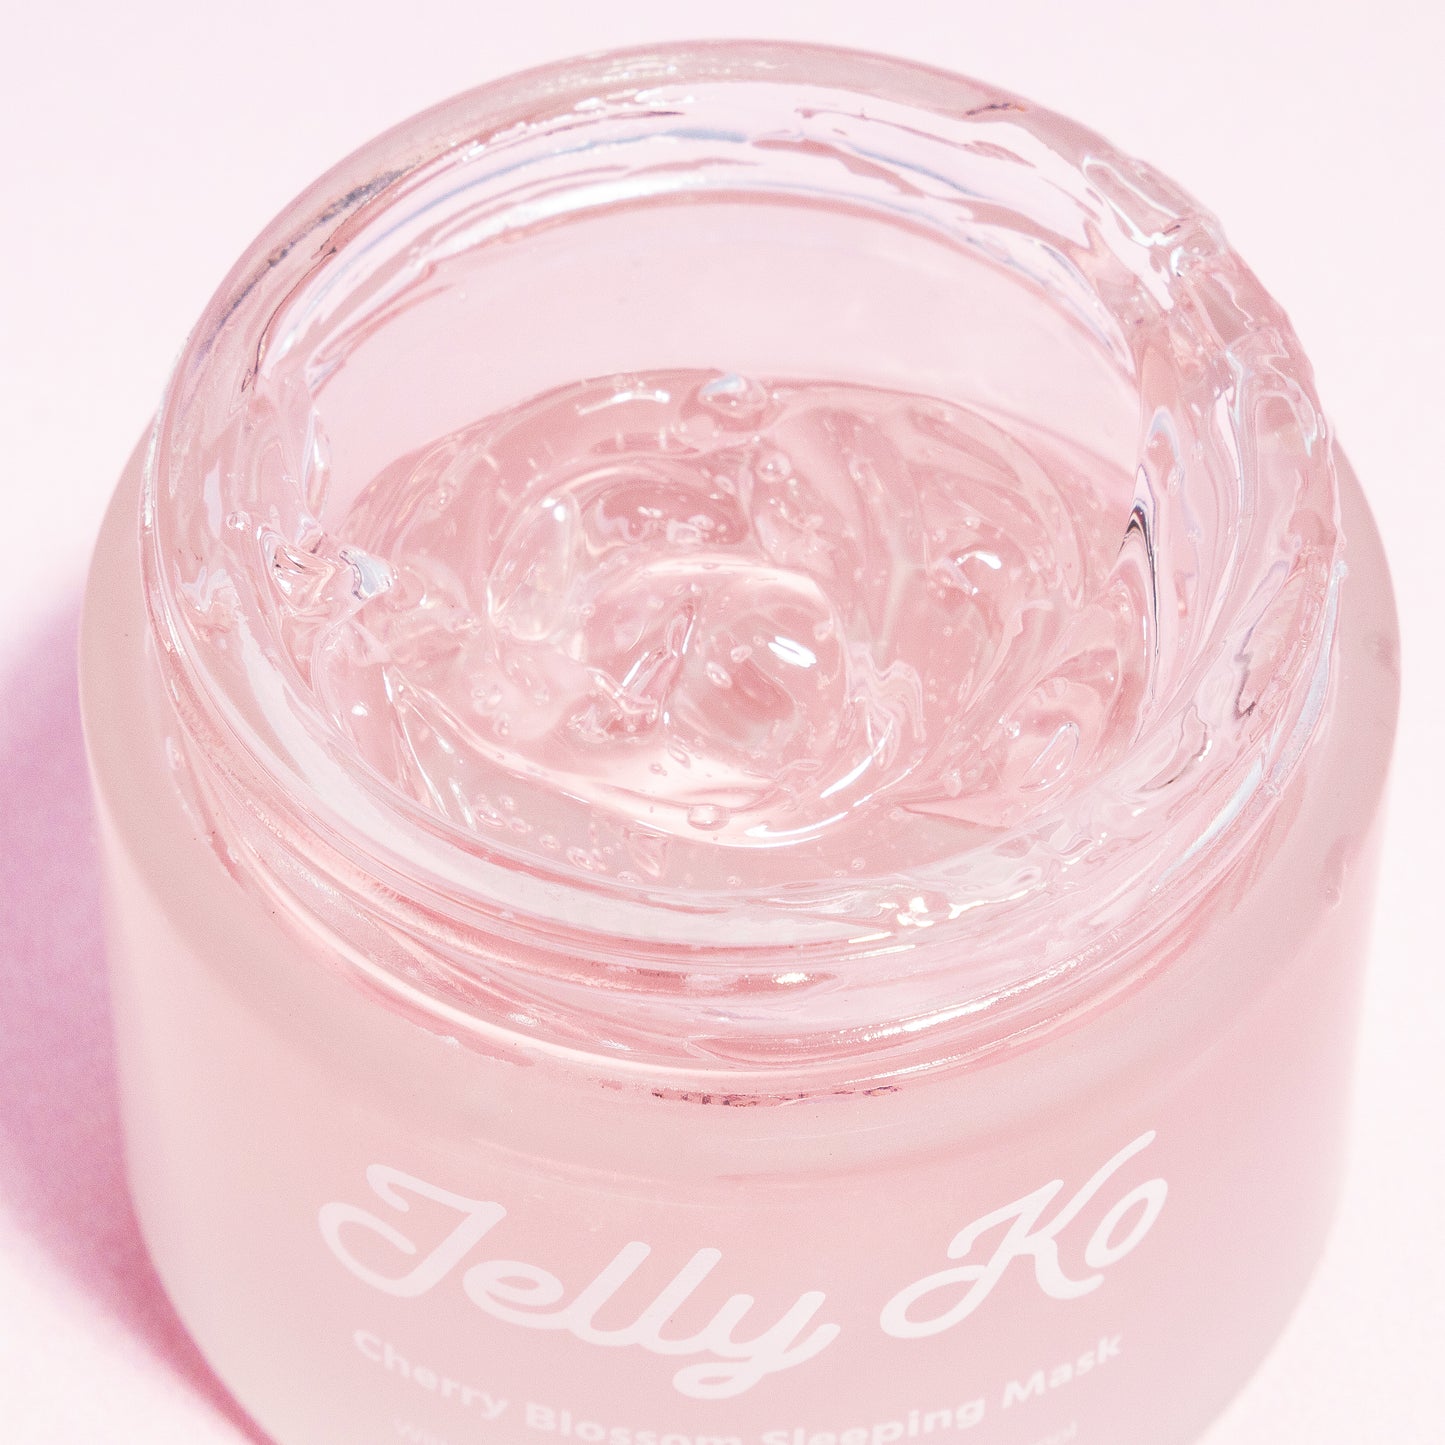 Jelly Ko Cherry Blossom Sleeping Mask